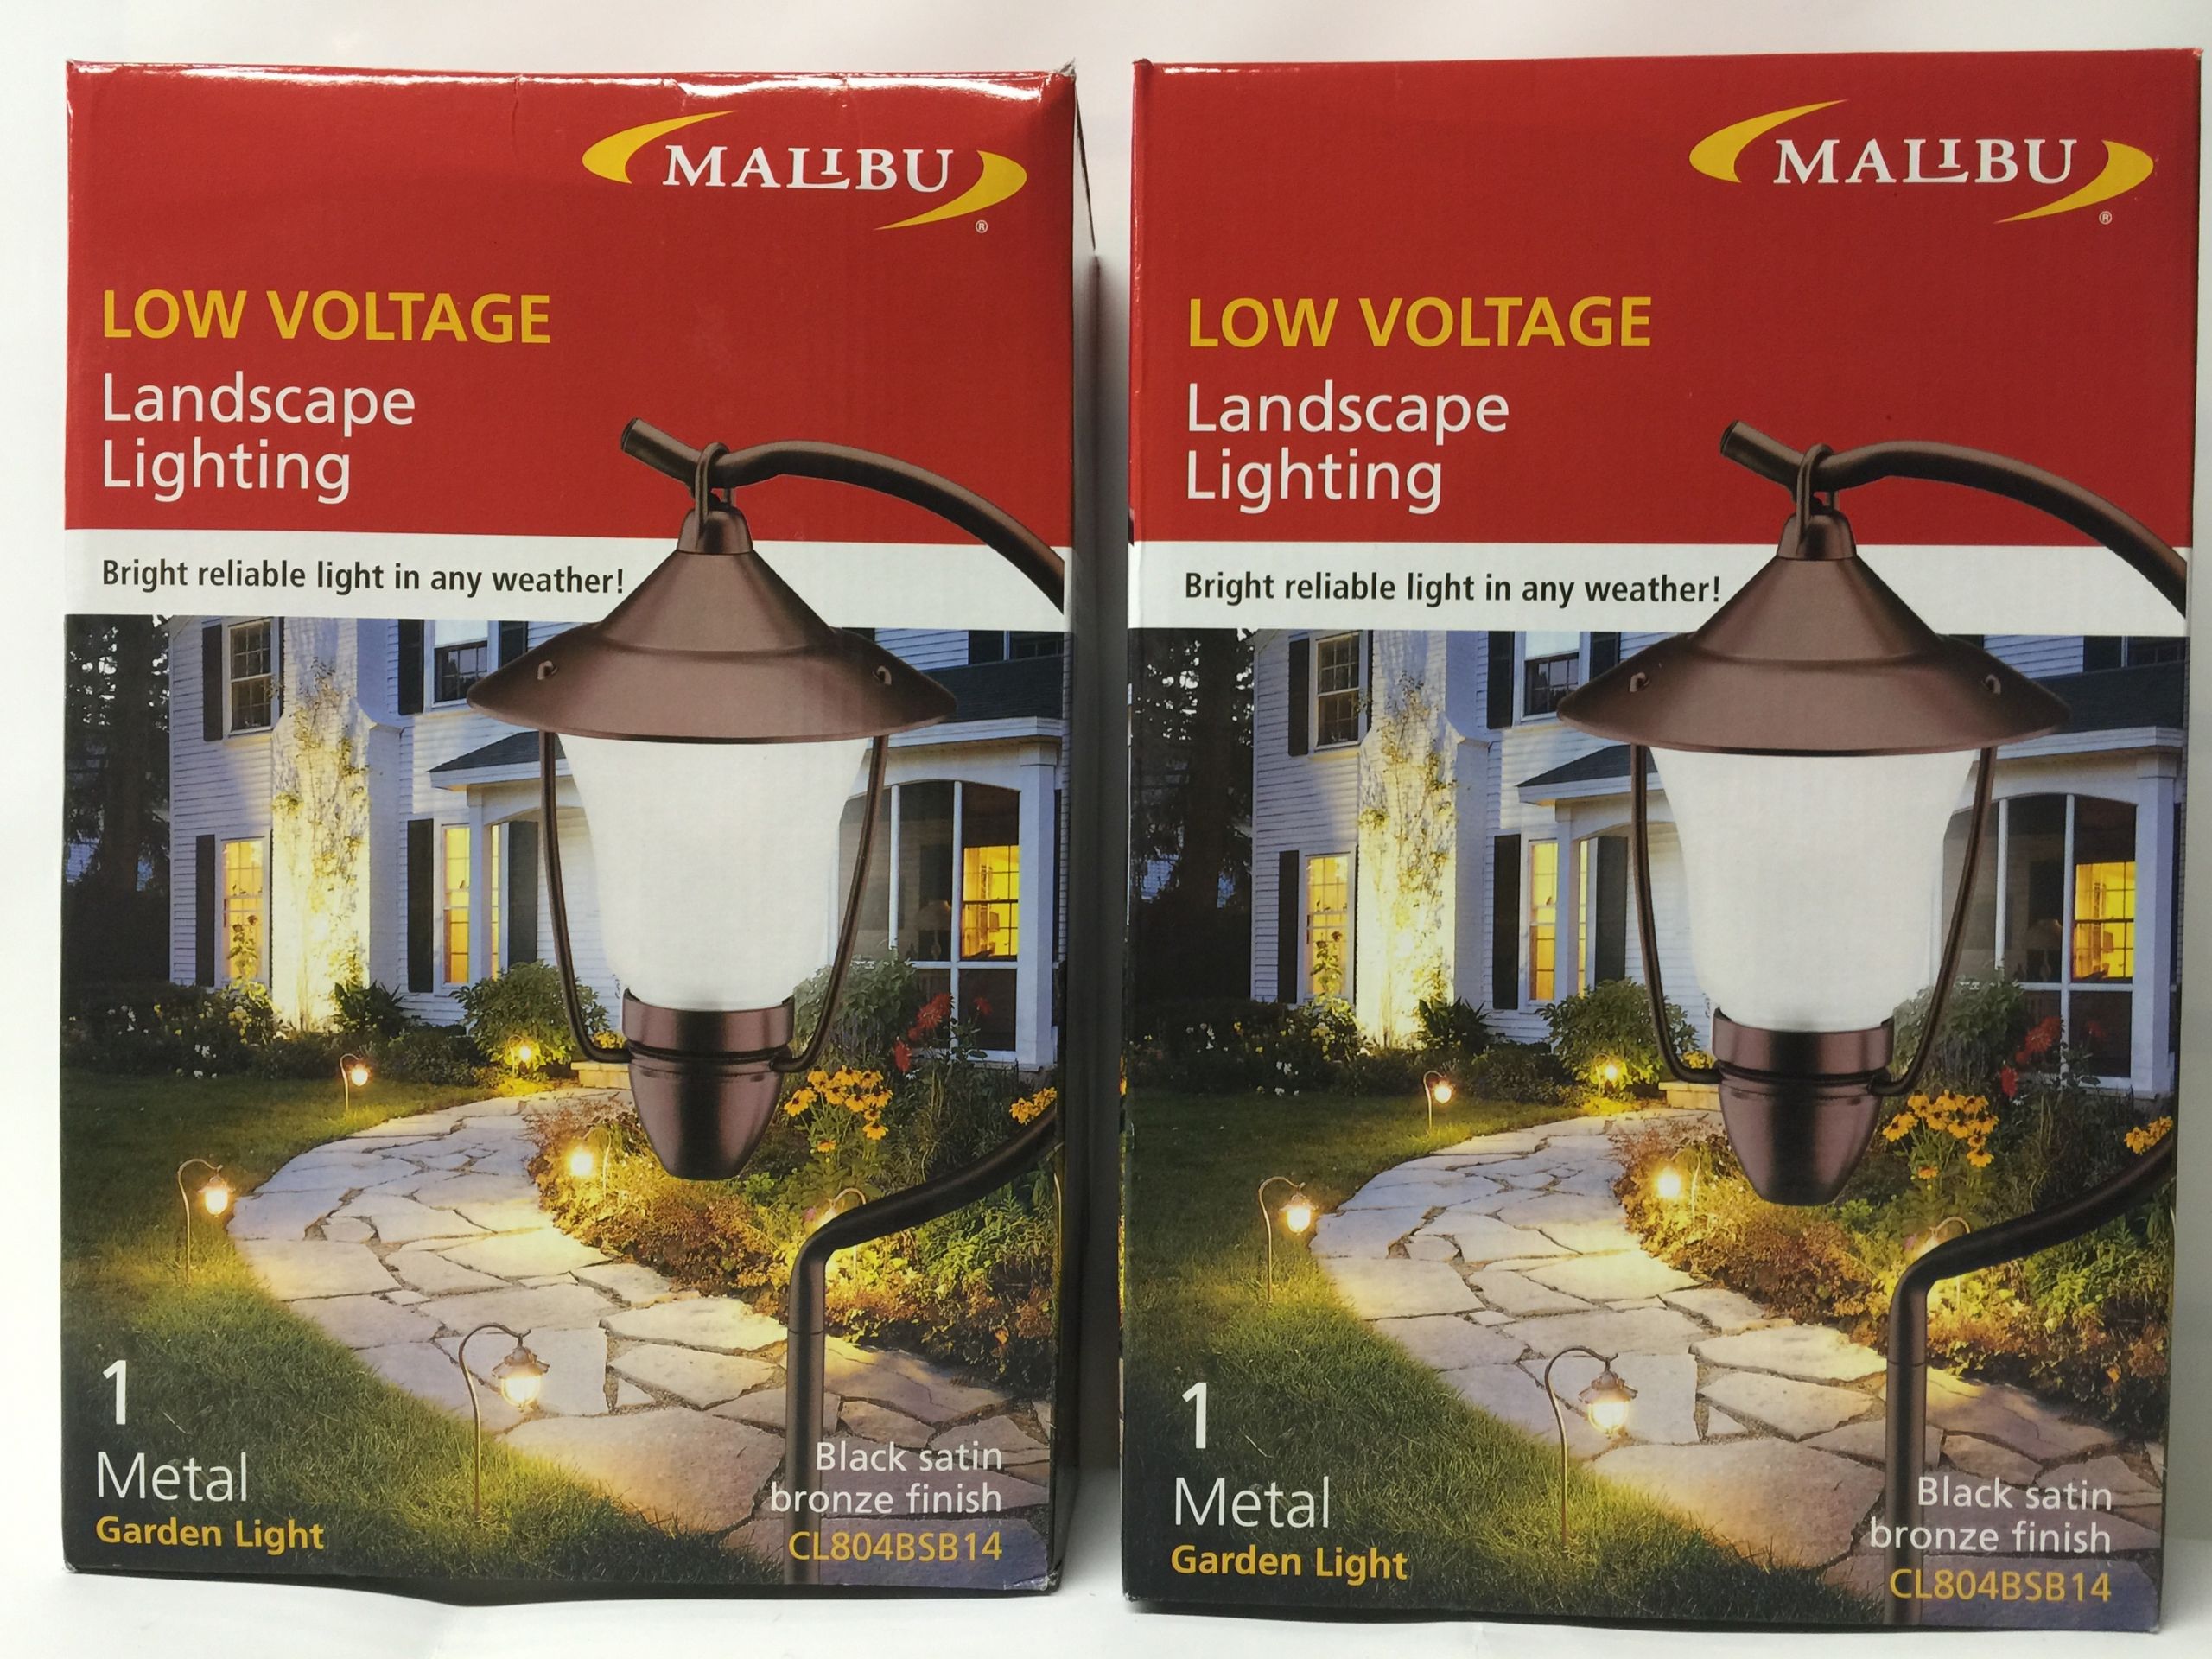 Malibu Low Voltage Landscape Light
 2 X Malibu Low Voltage Landscape Lighting Metal Garden